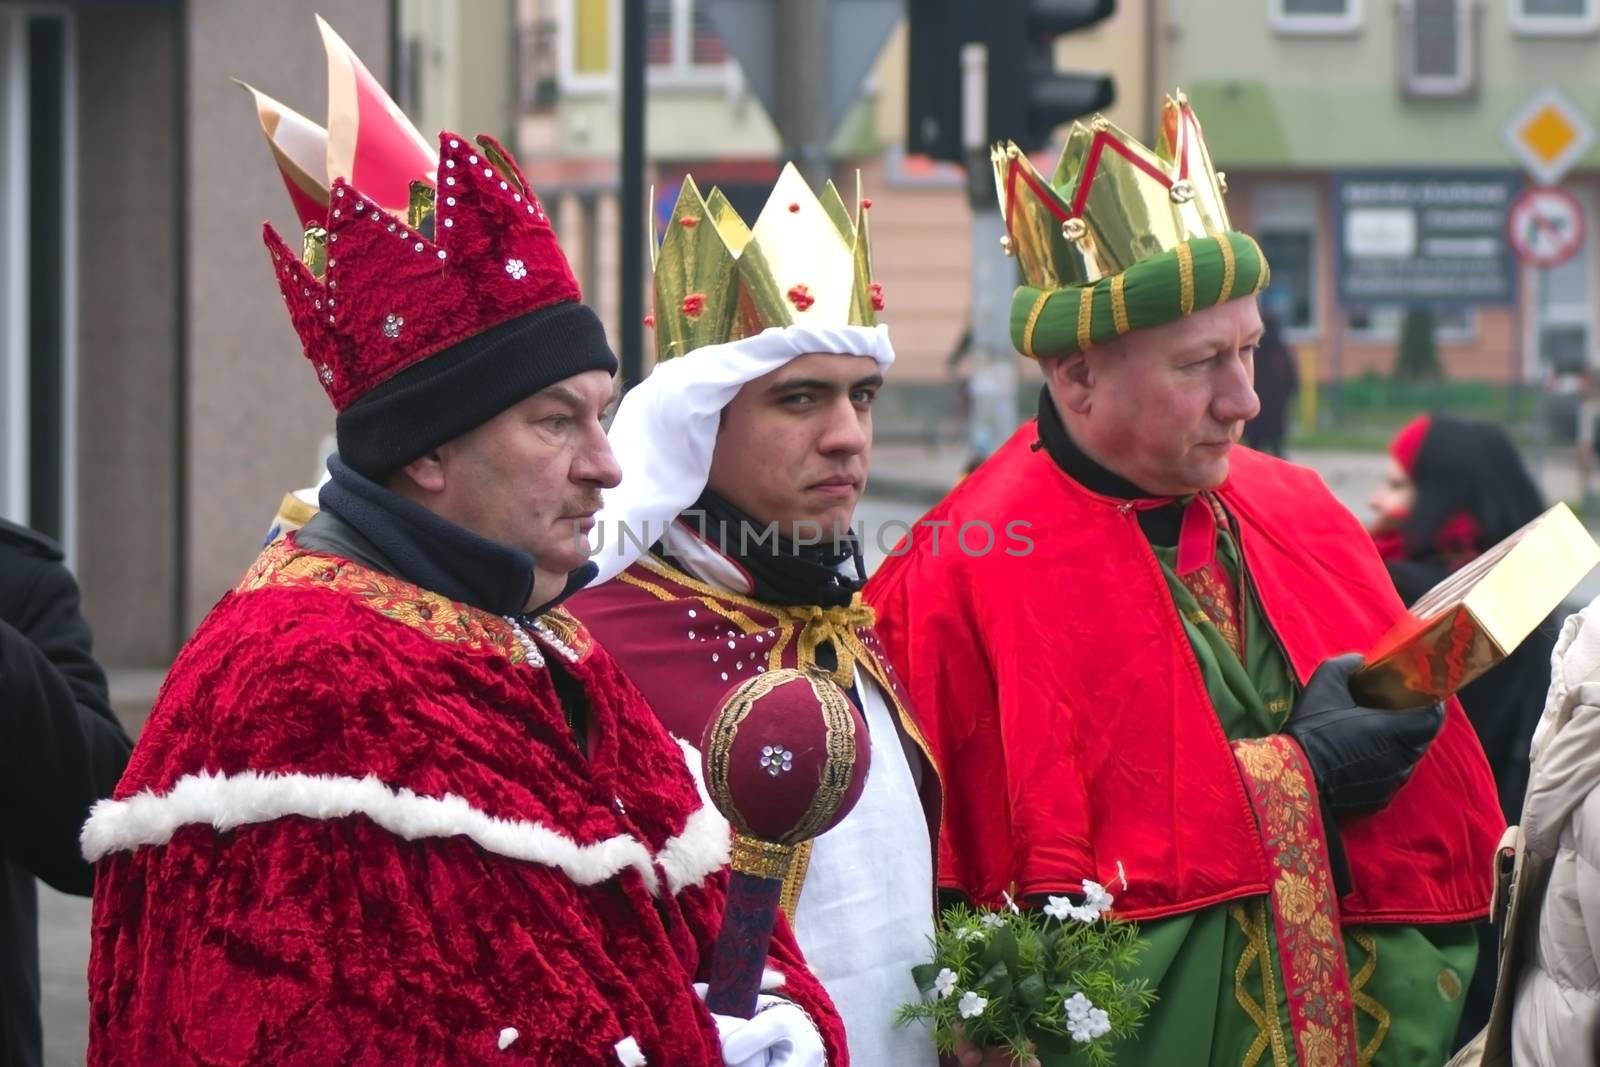 Wloclawek, Poland - January 6, 2014: Catholics celebrate Epiphany or Three Kings’ Day in a street procession